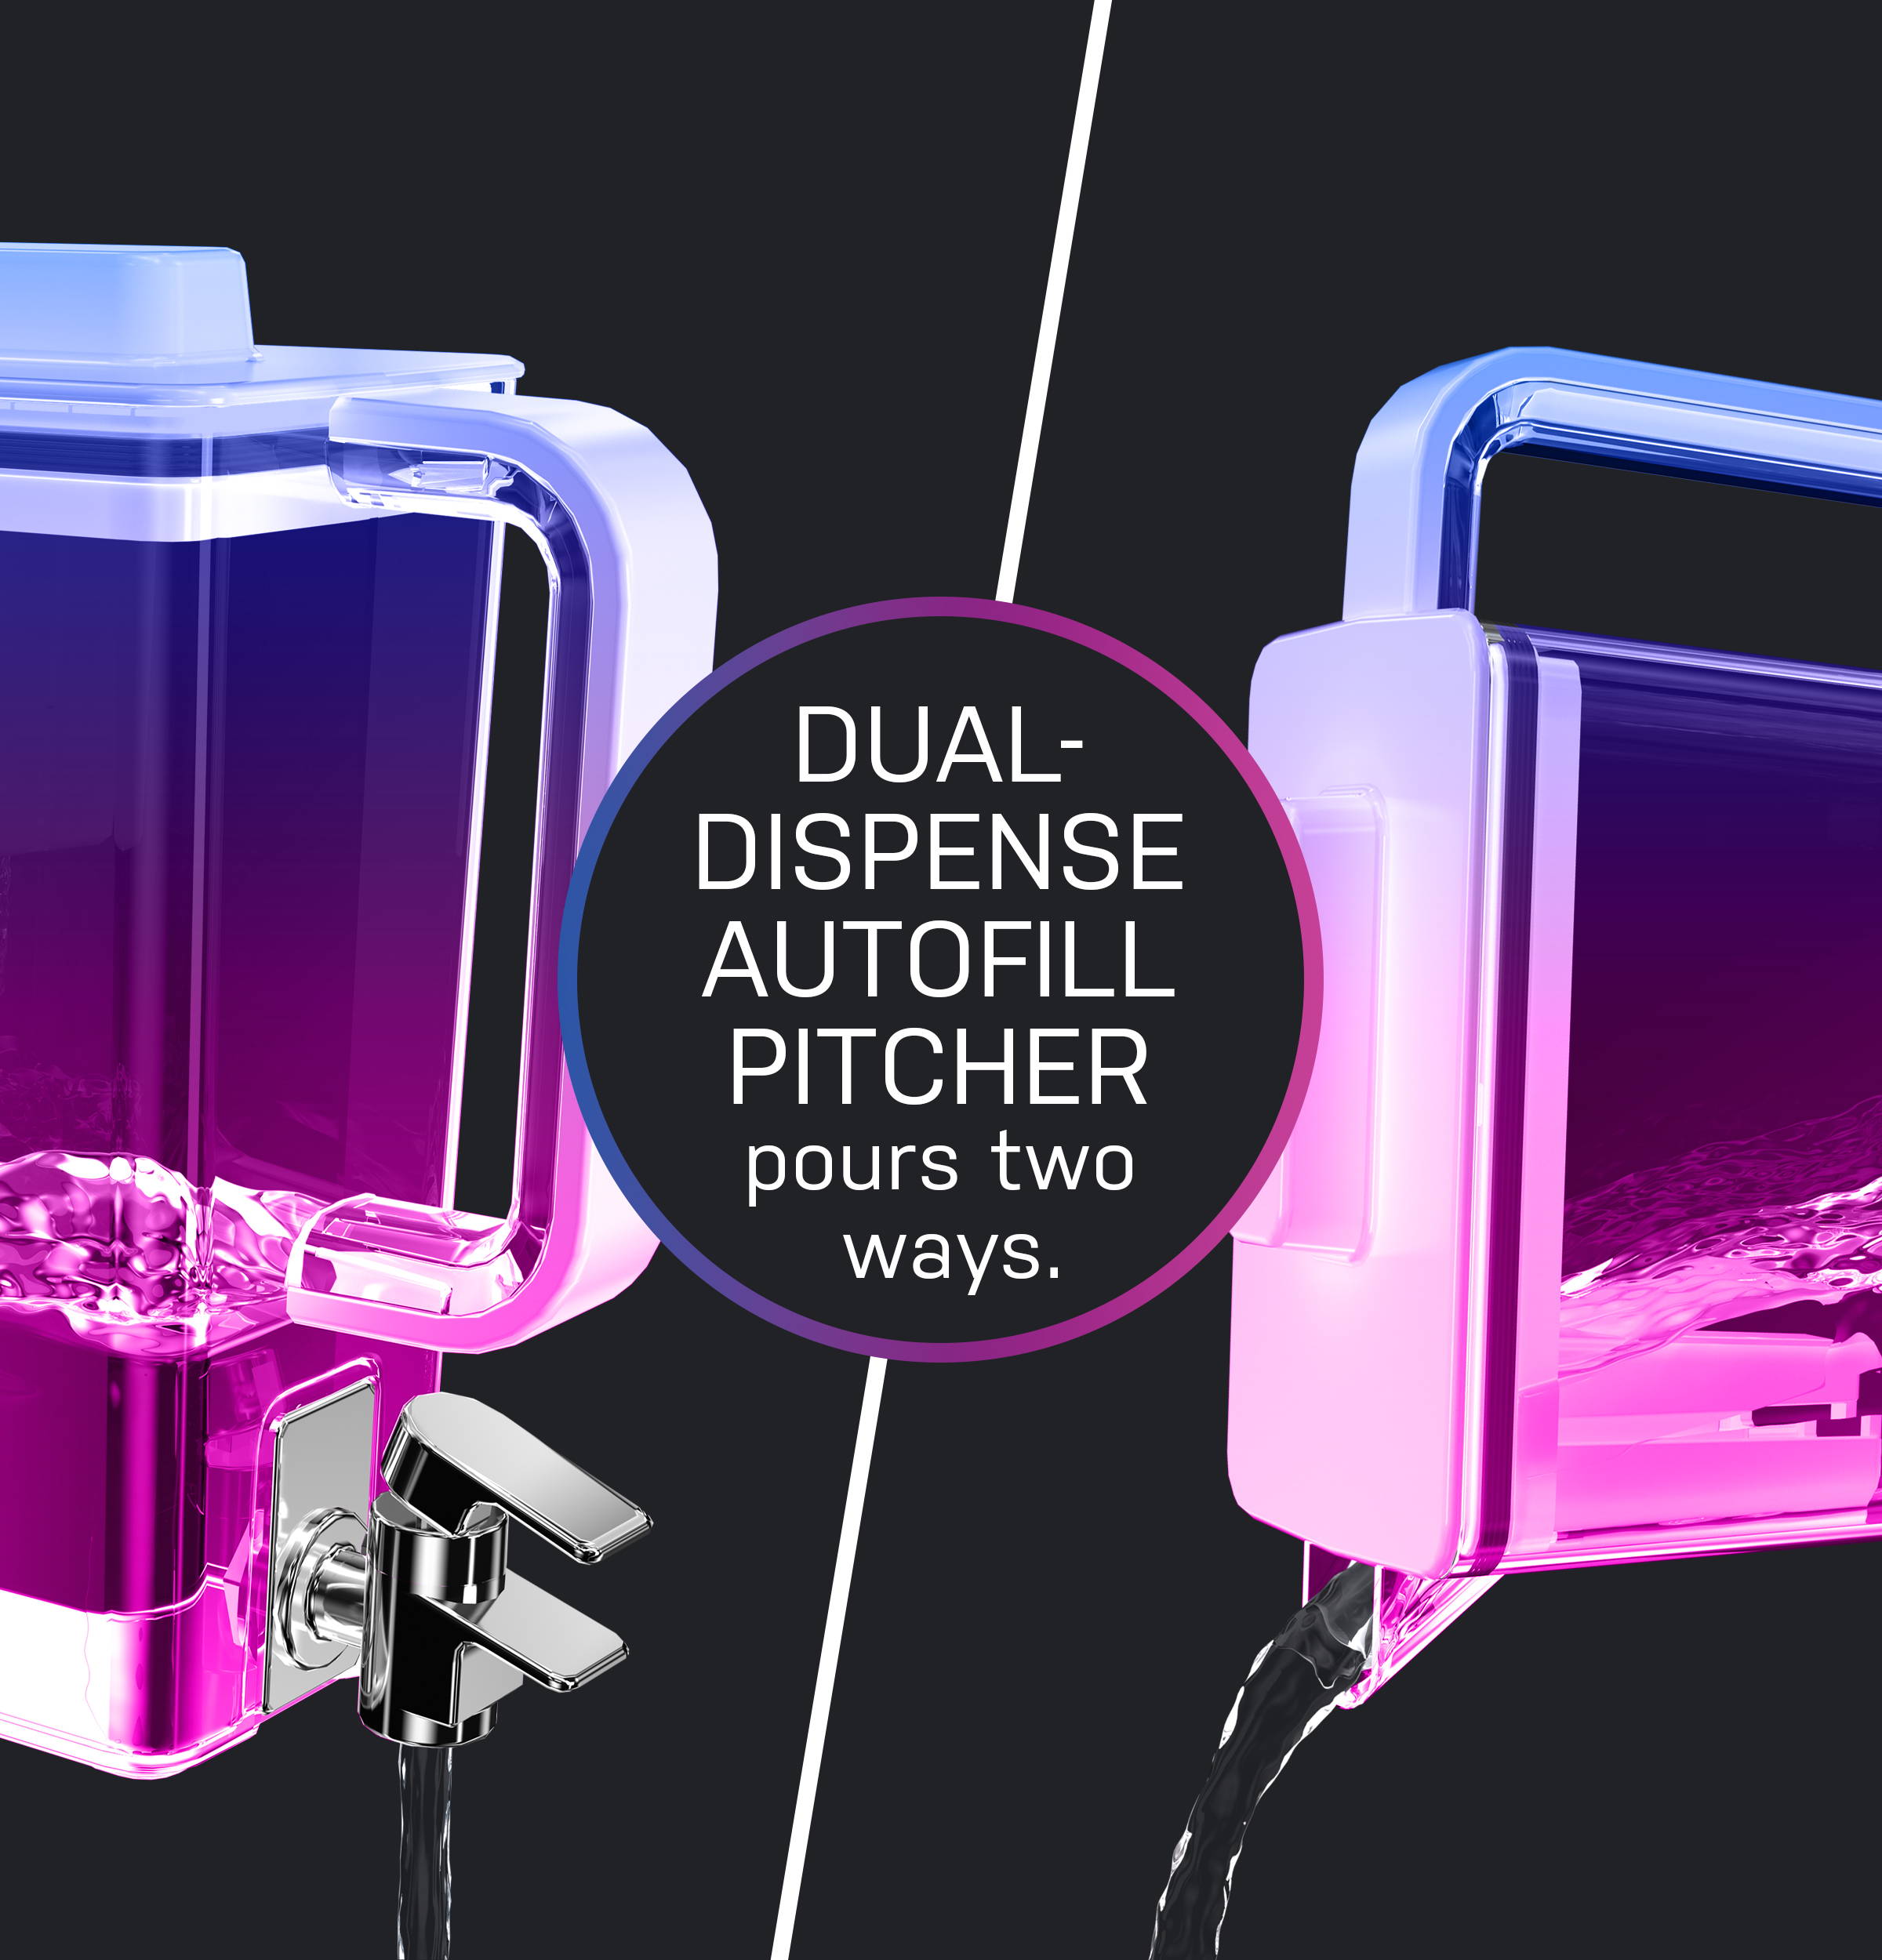 dual-dispense autofill pitcher